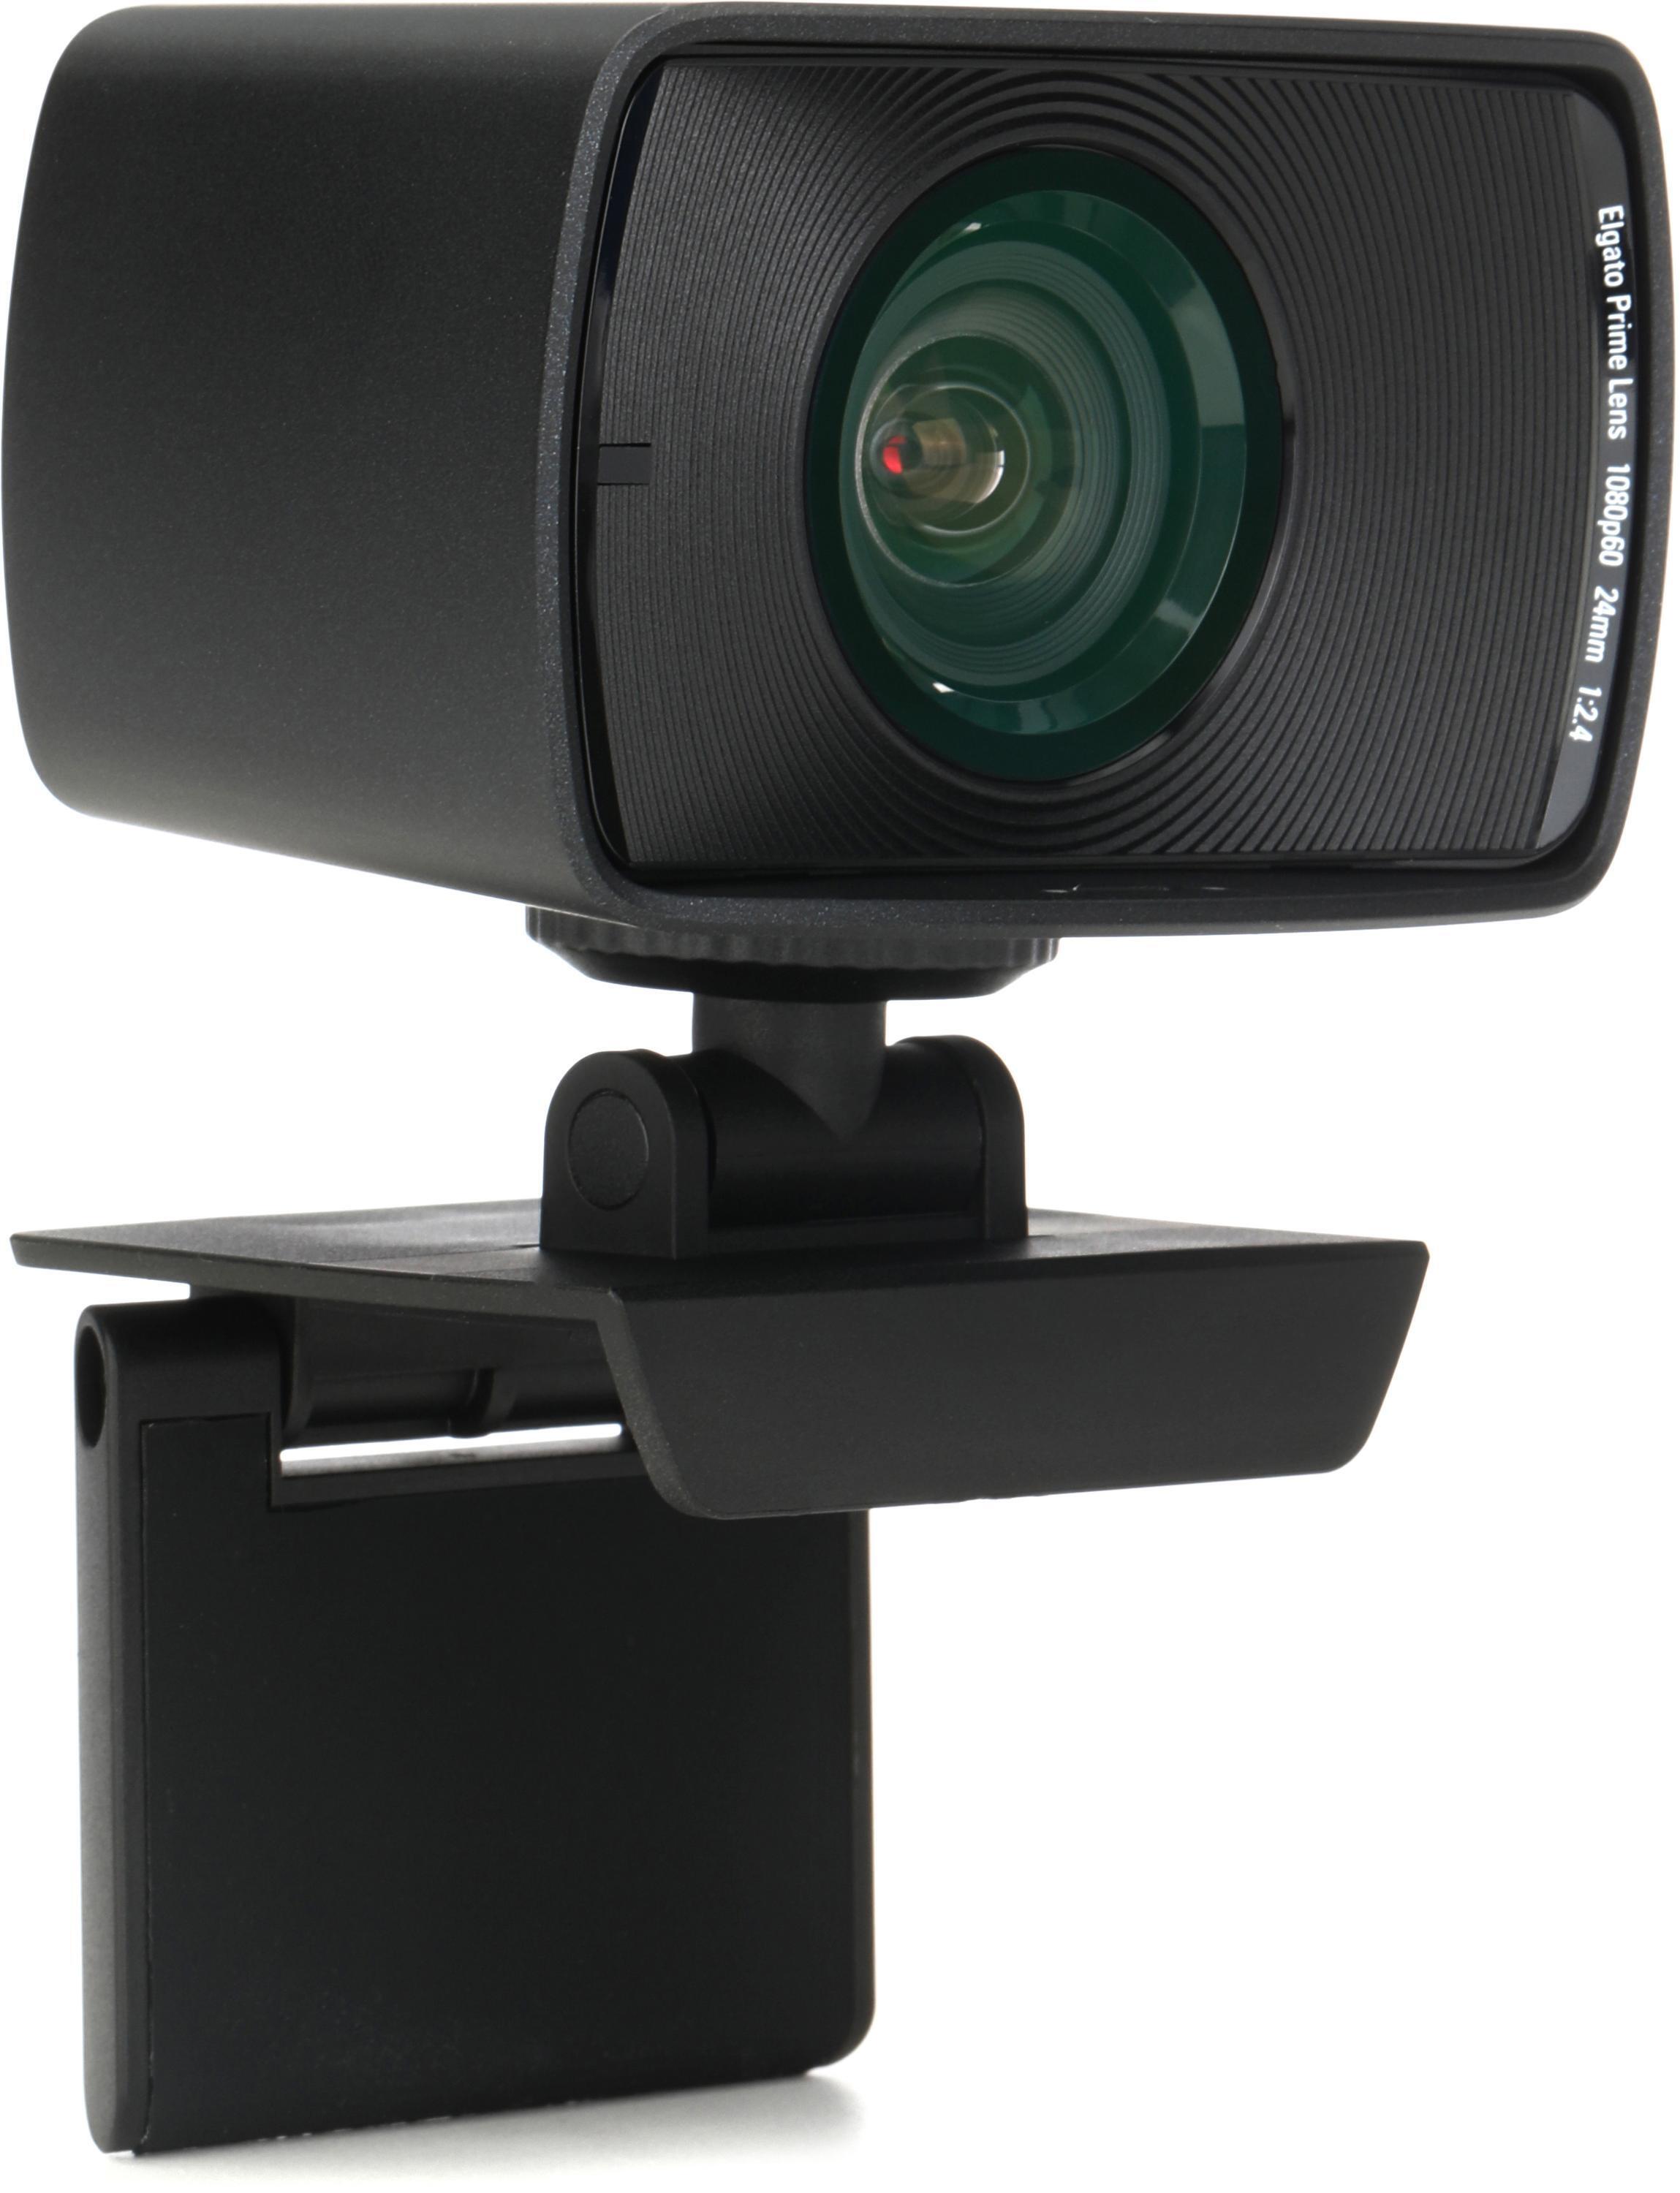 Elgato Facecam Full HD Streaming Web Camera